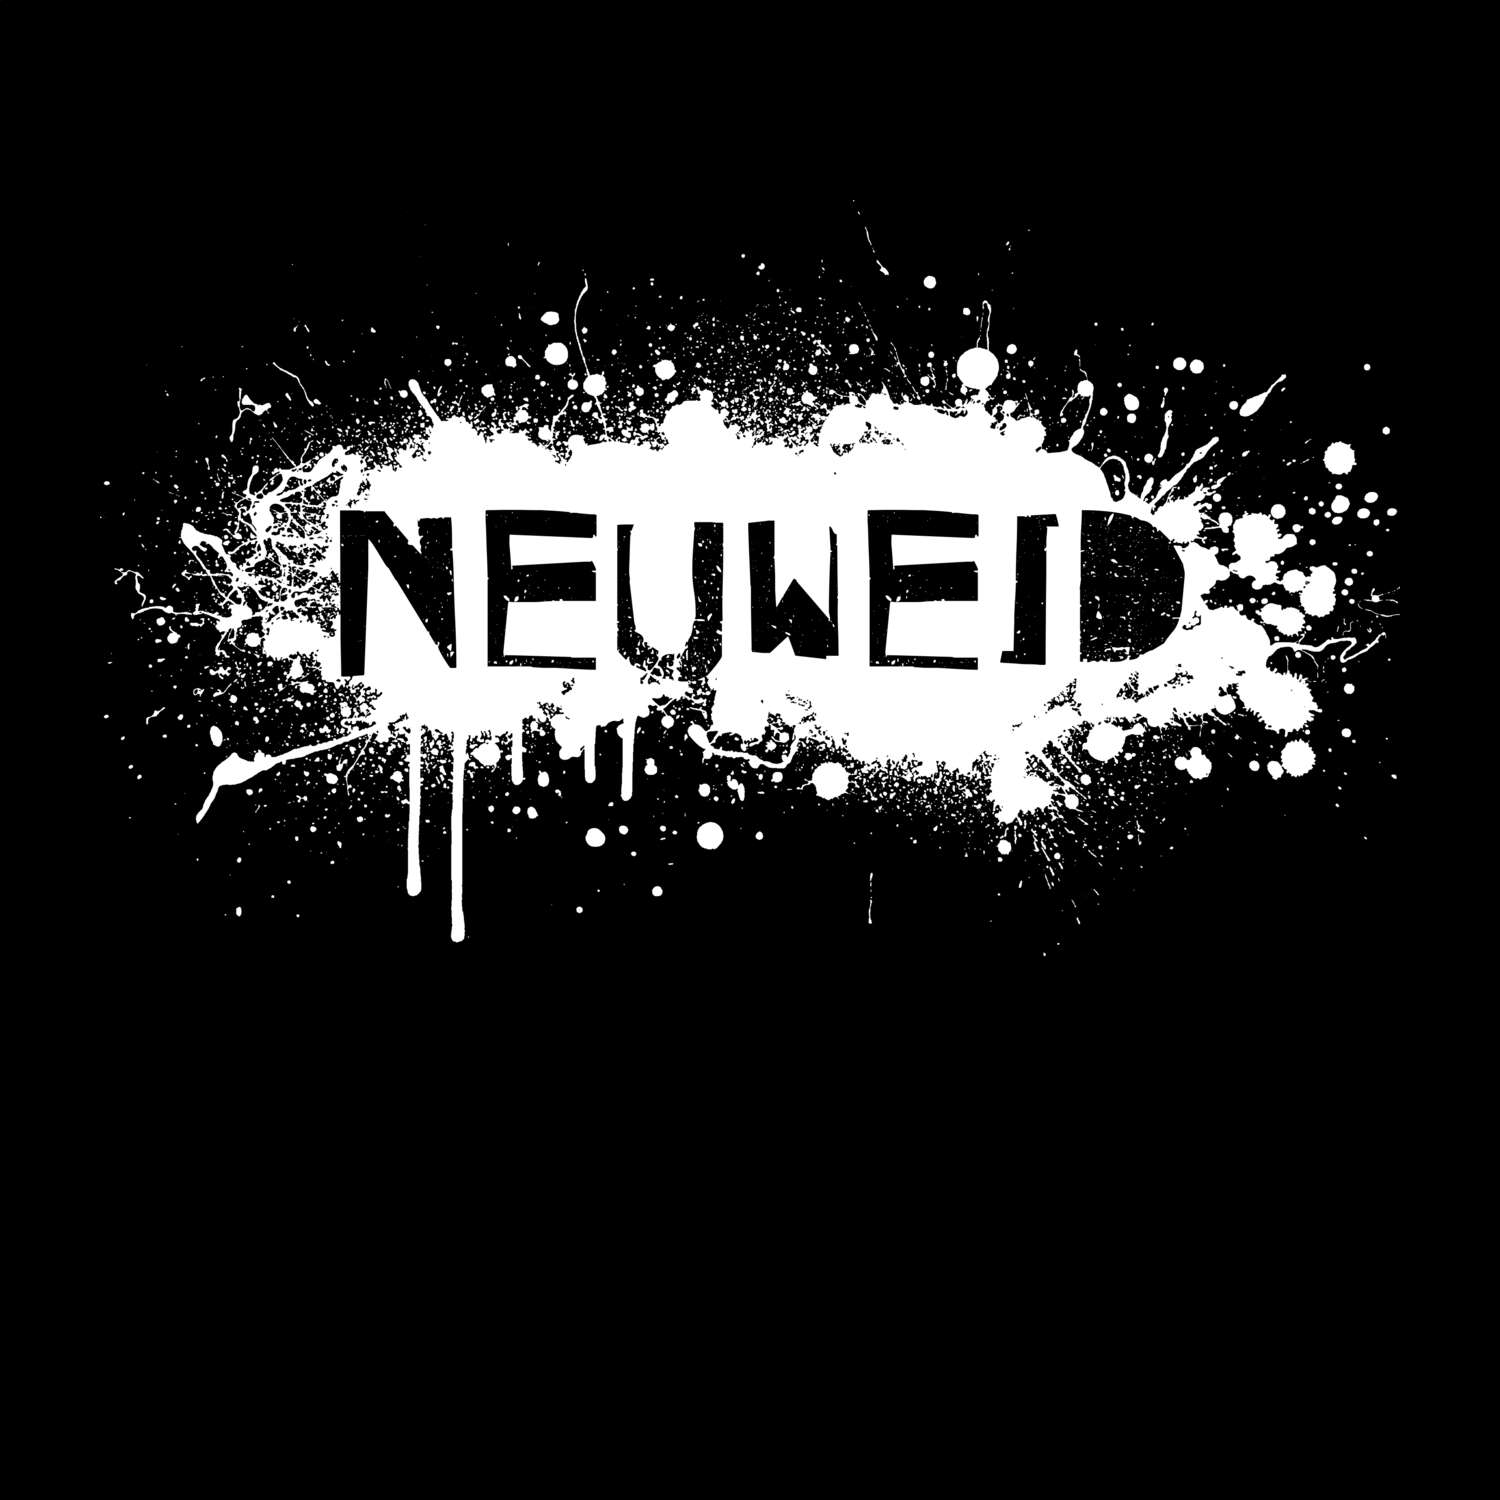 Neuweid T-Shirt »Paint Splash Punk«